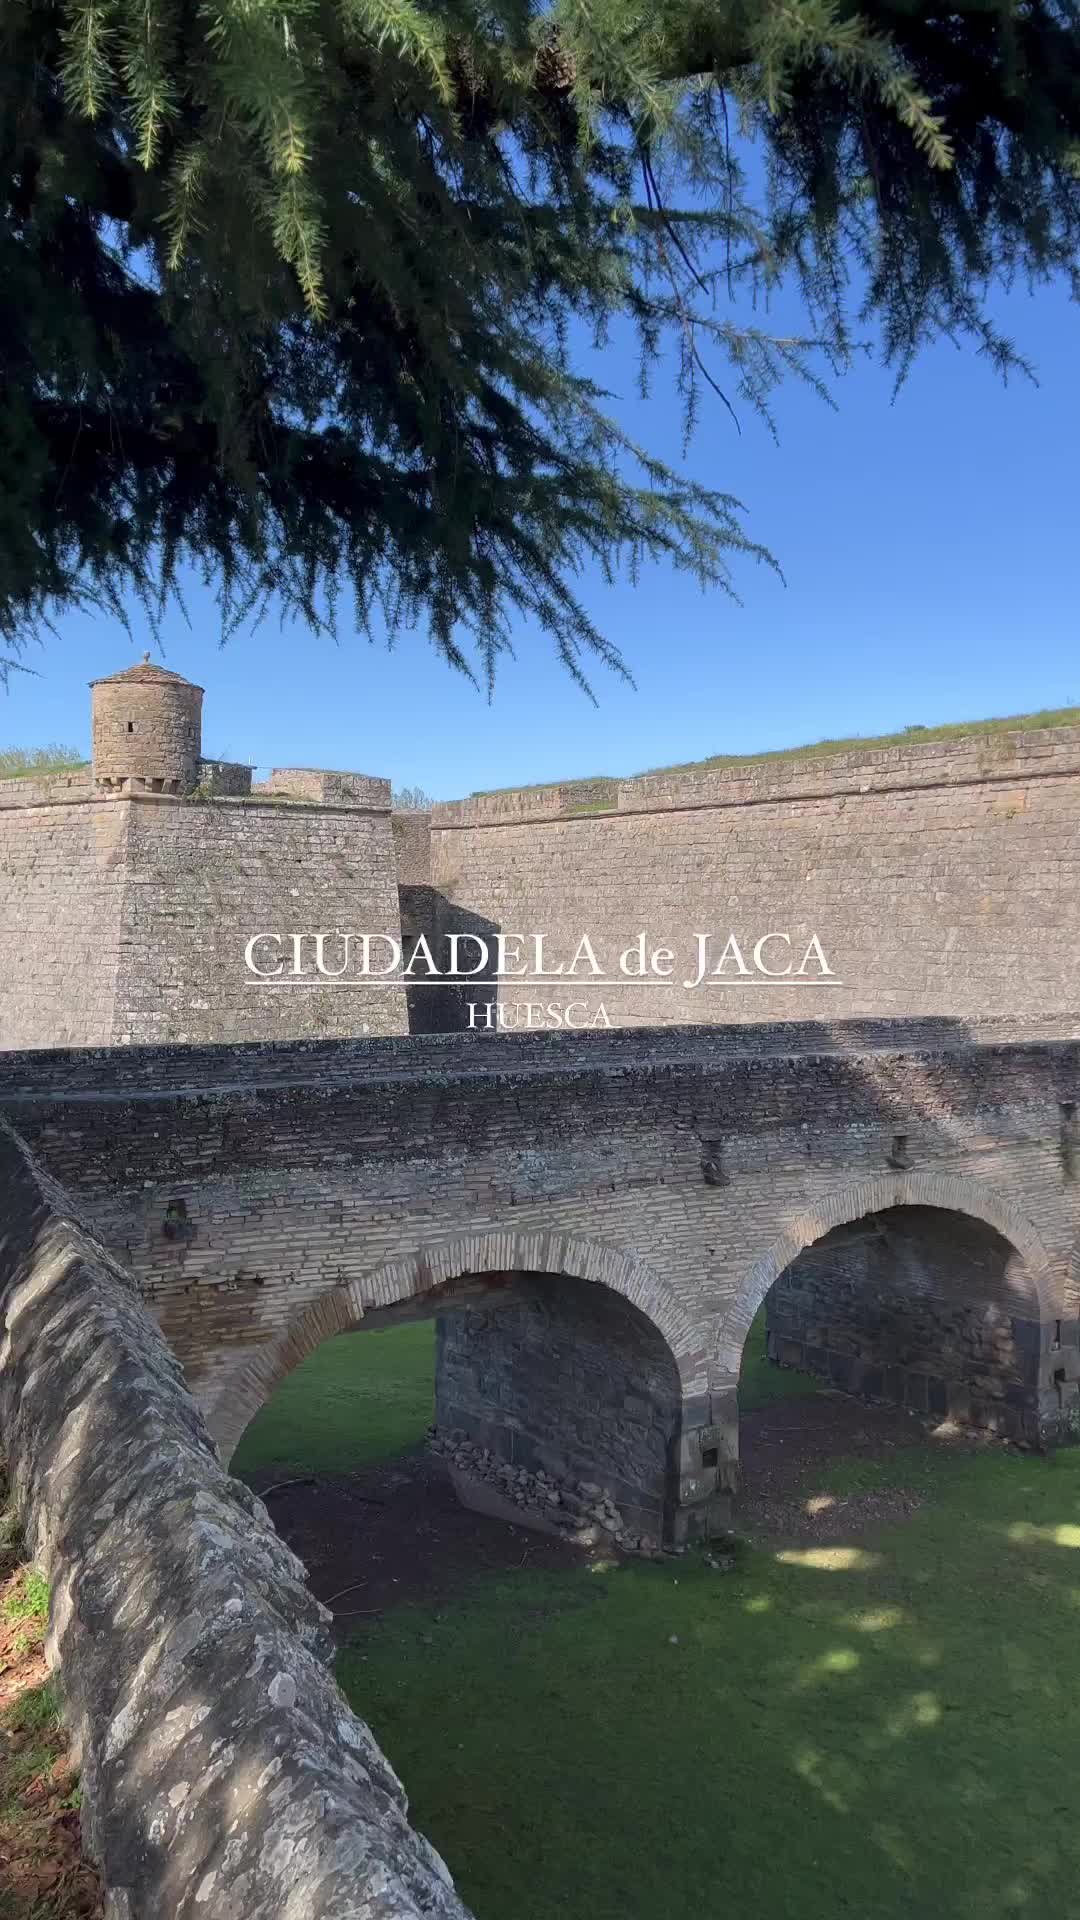 Discover the Stunning Ciudadela de Jaca Fortress